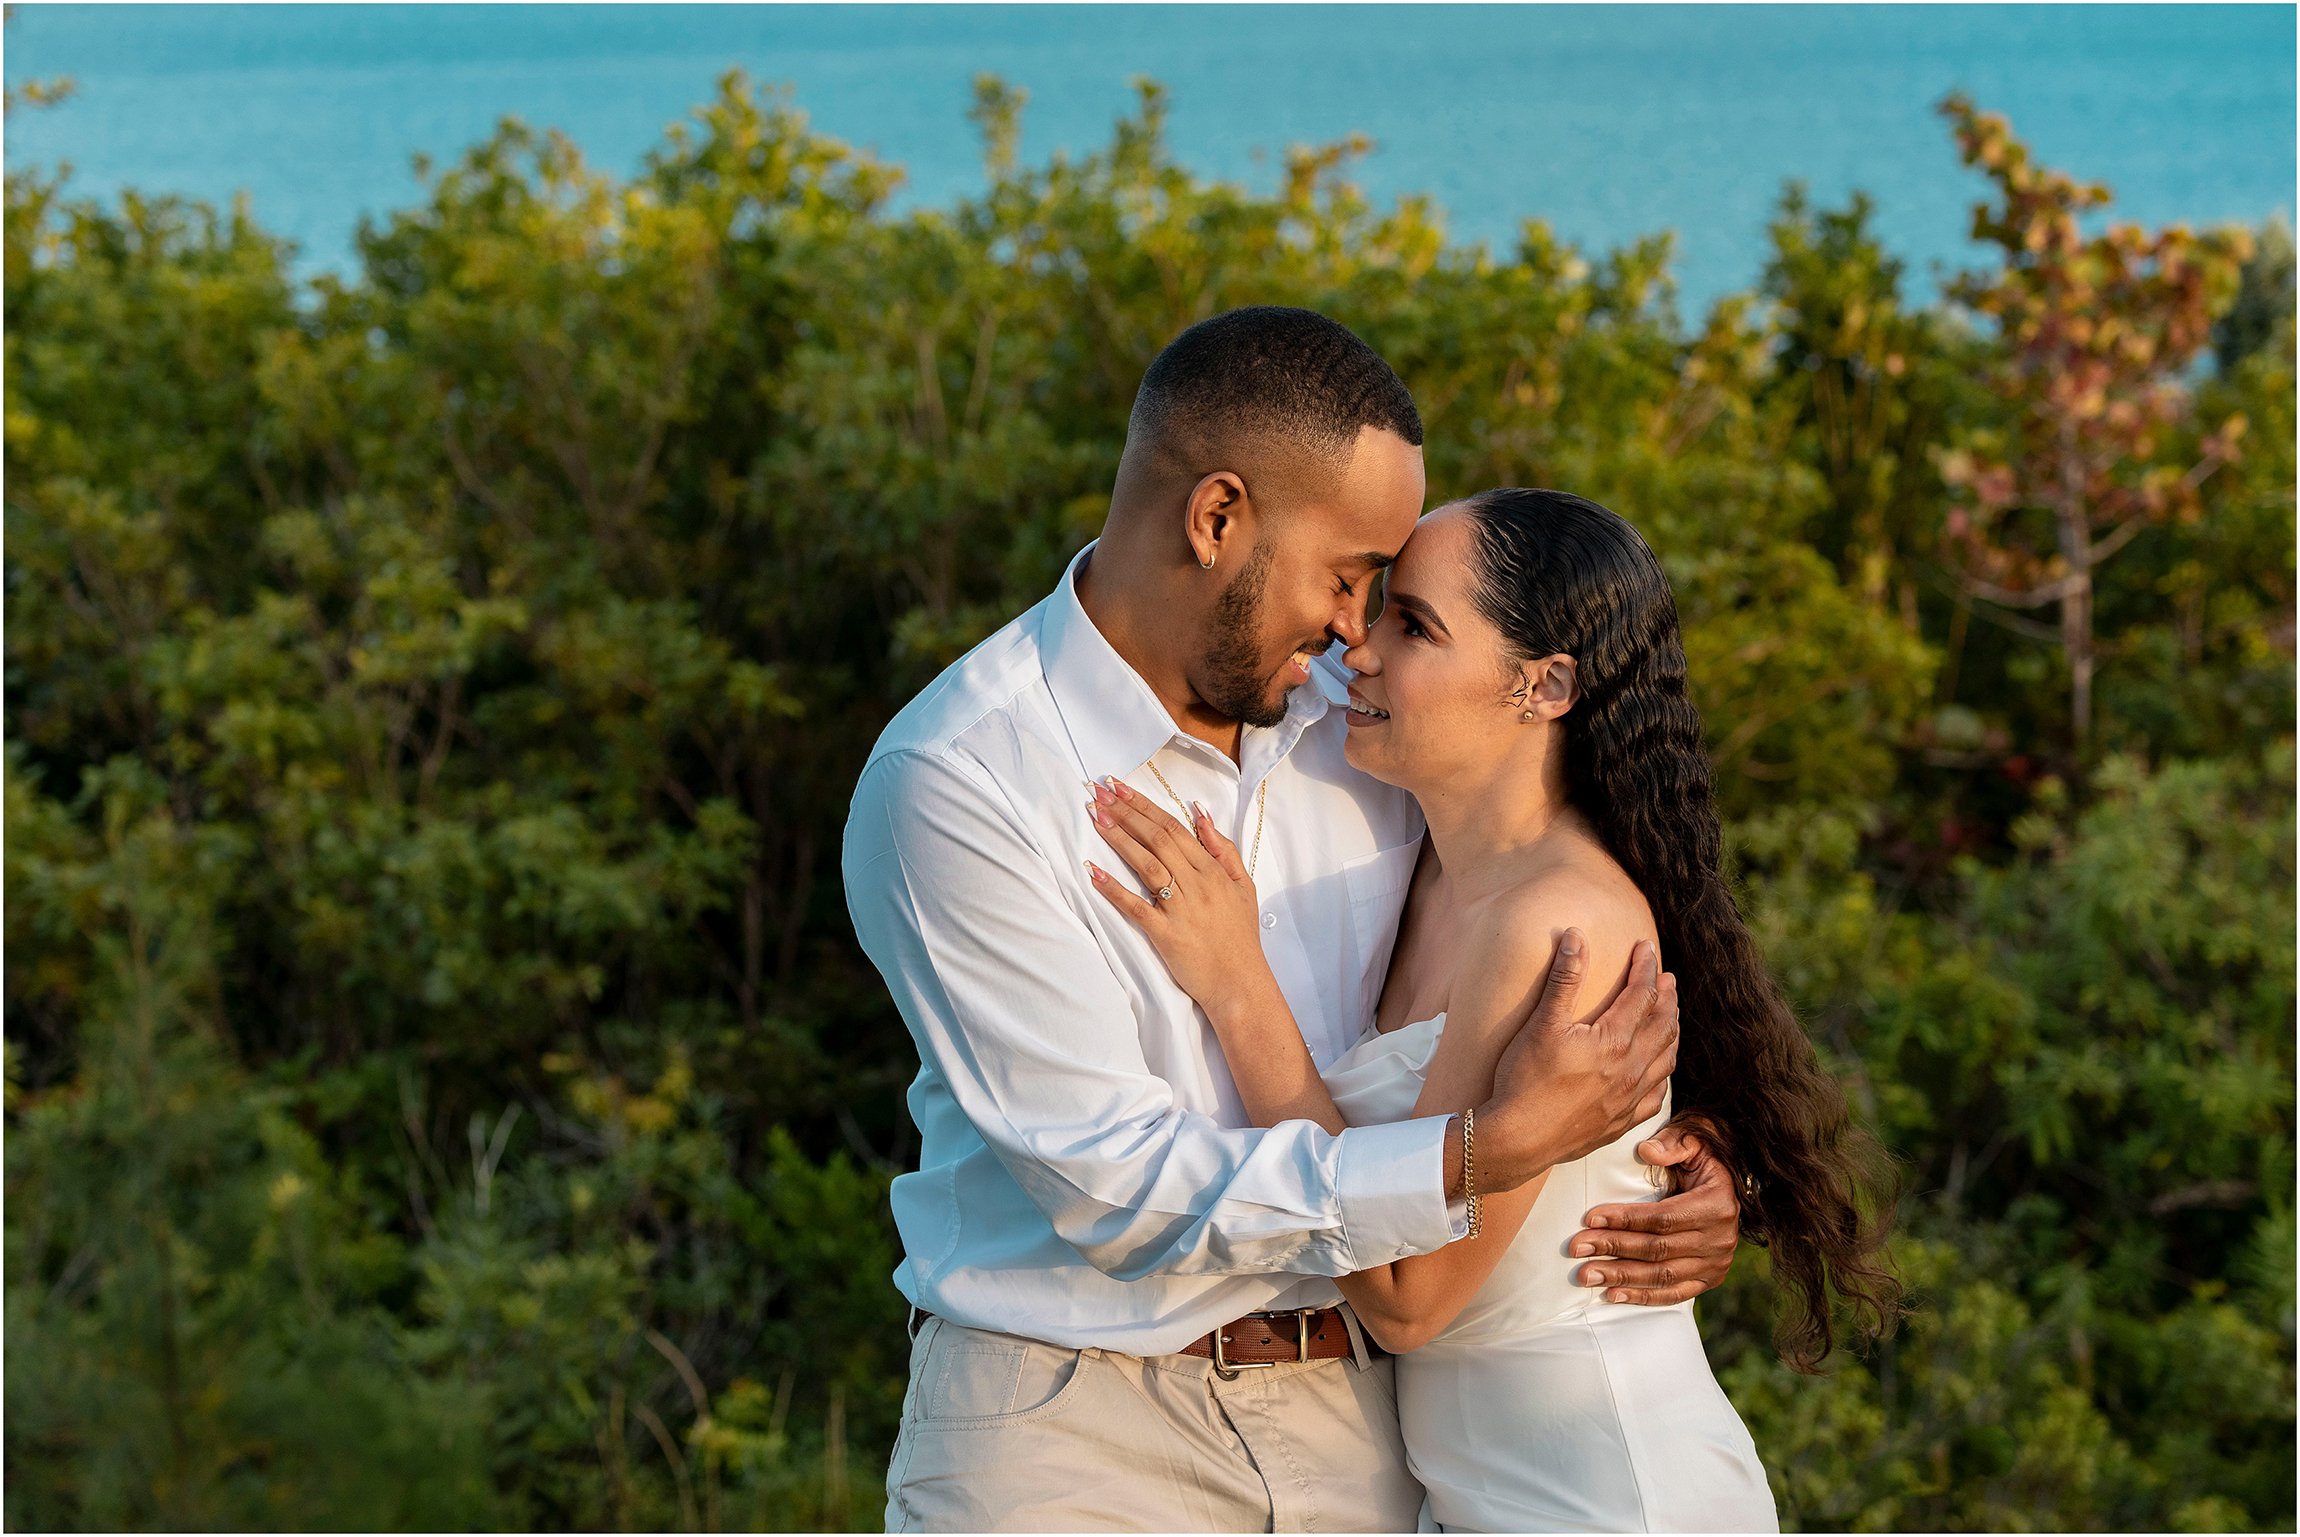 Bermuda Engagement Photography_Ft. Scaur_©FianderFoto_015.jpg